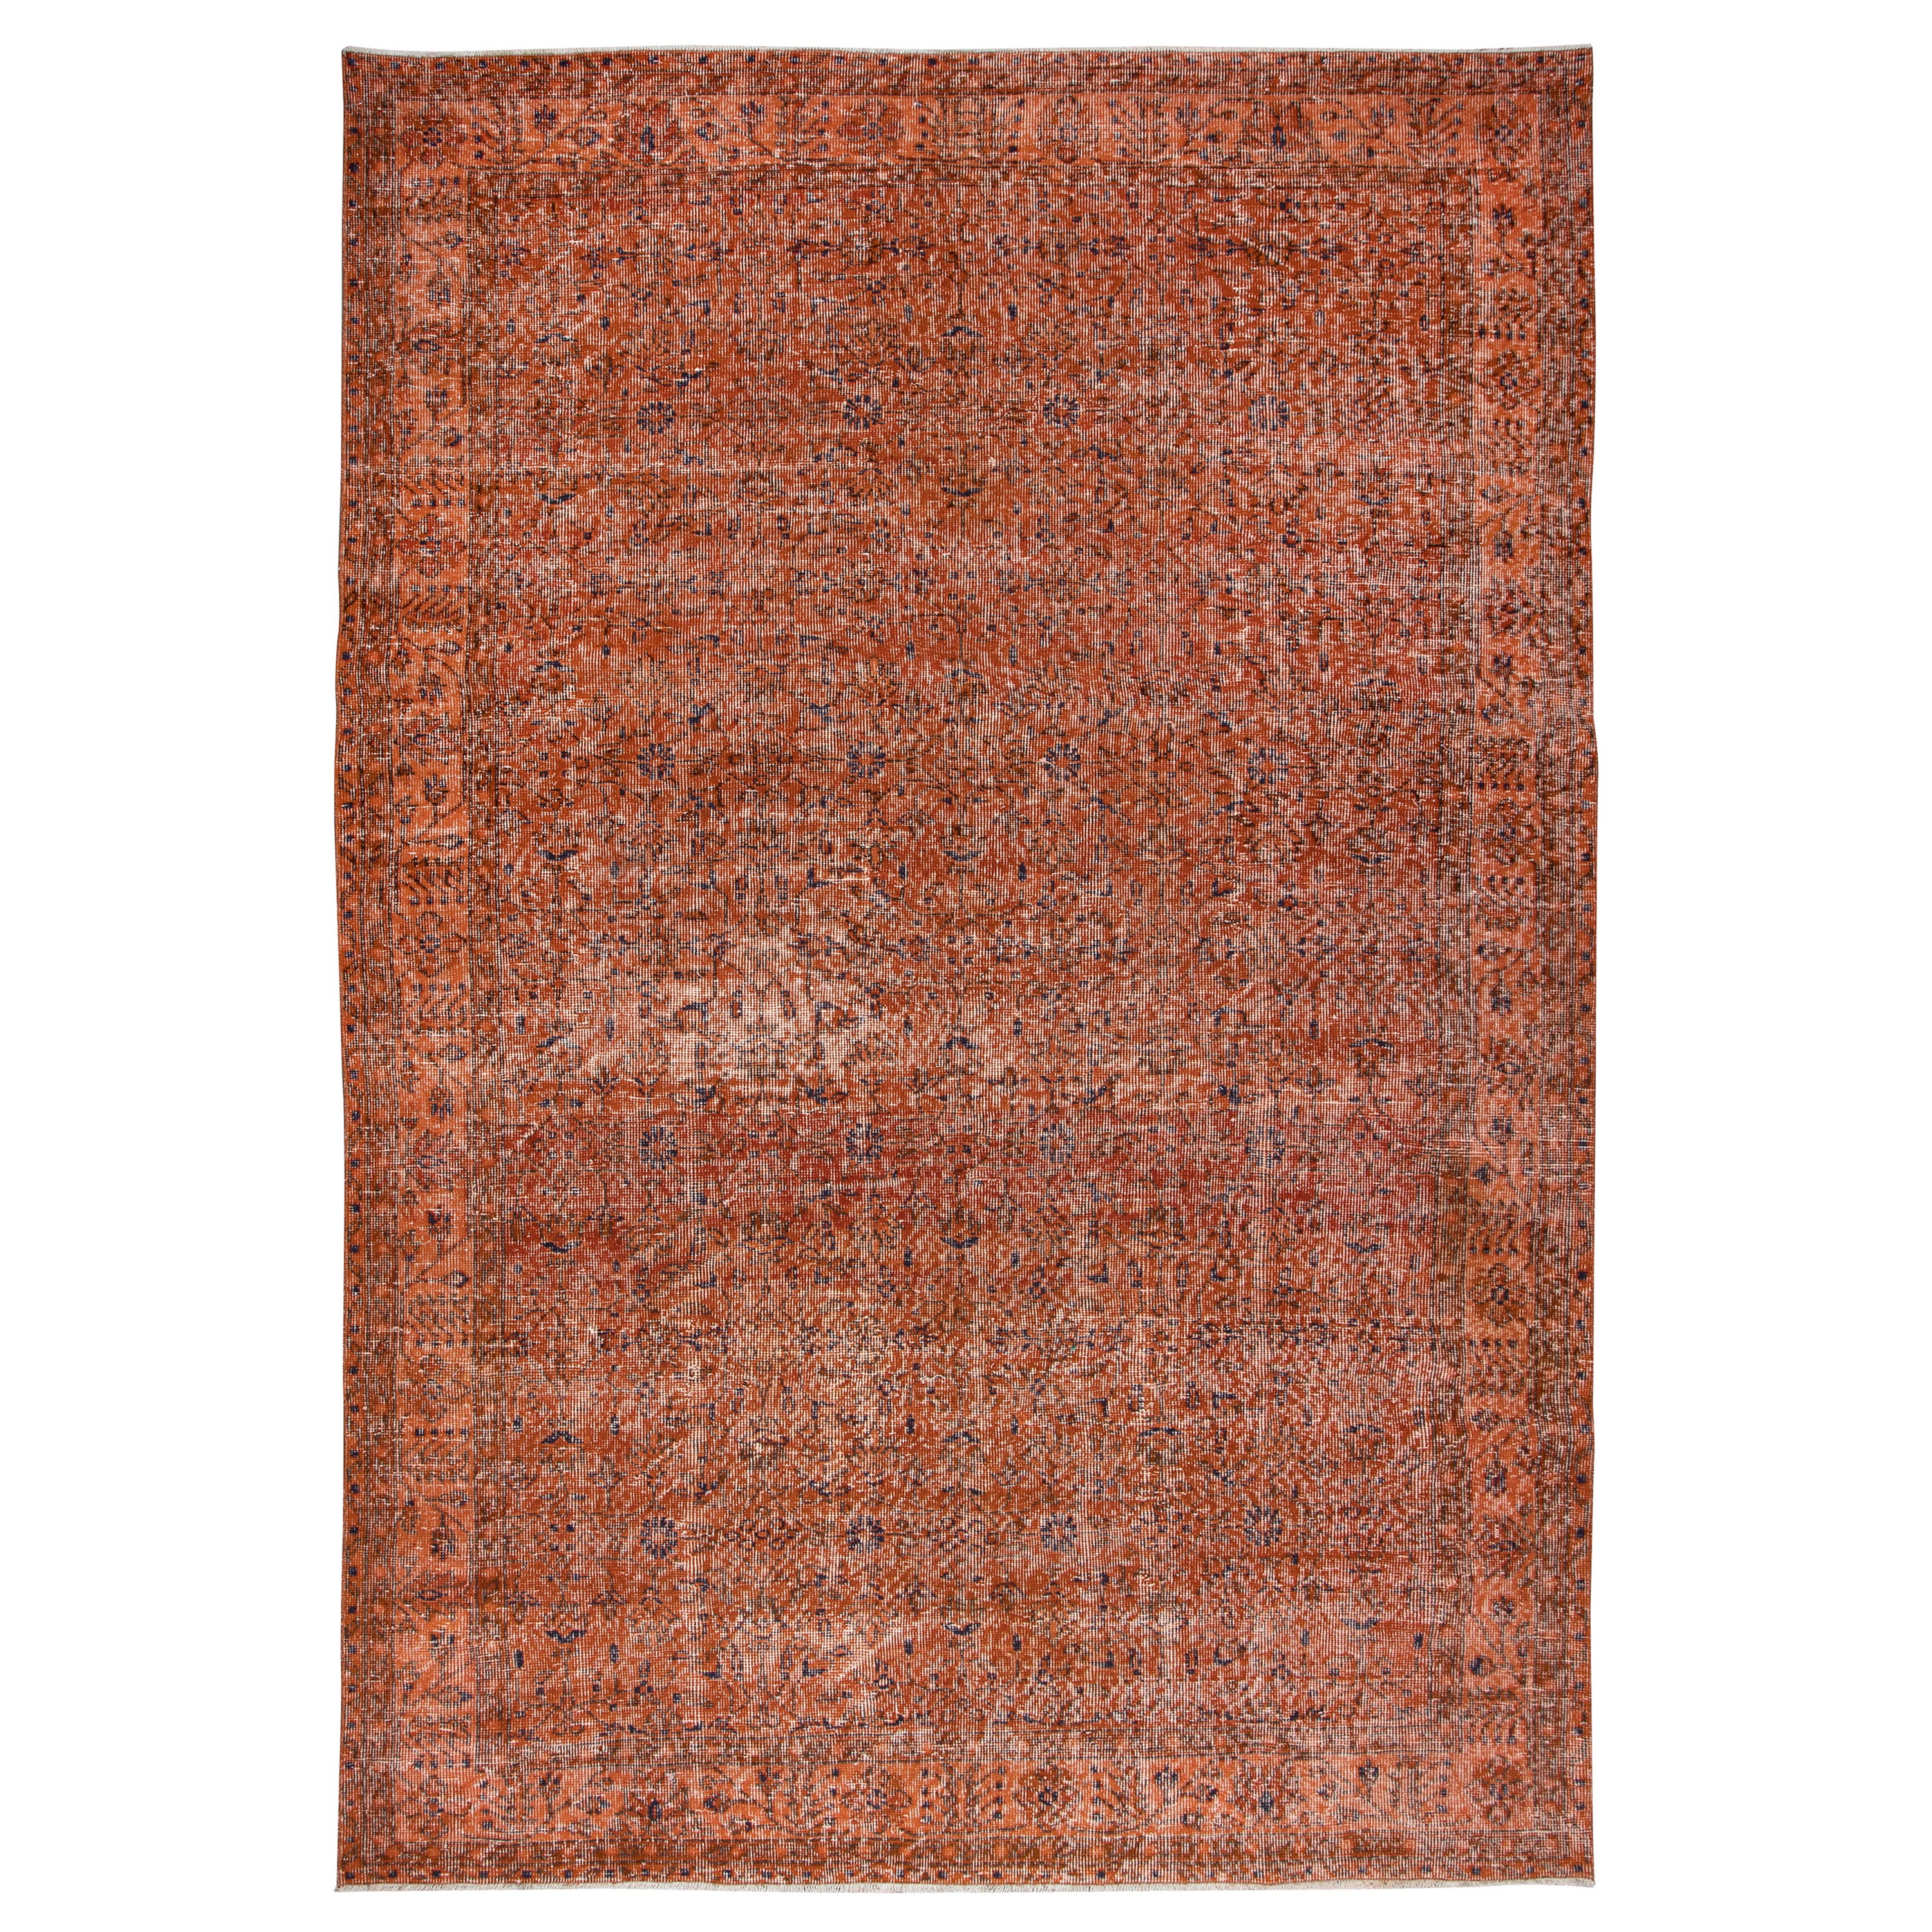 6.7x10 ft Handmade Turkish Orange Rug, Modern Floral Carpet, Bohemian Home Decor